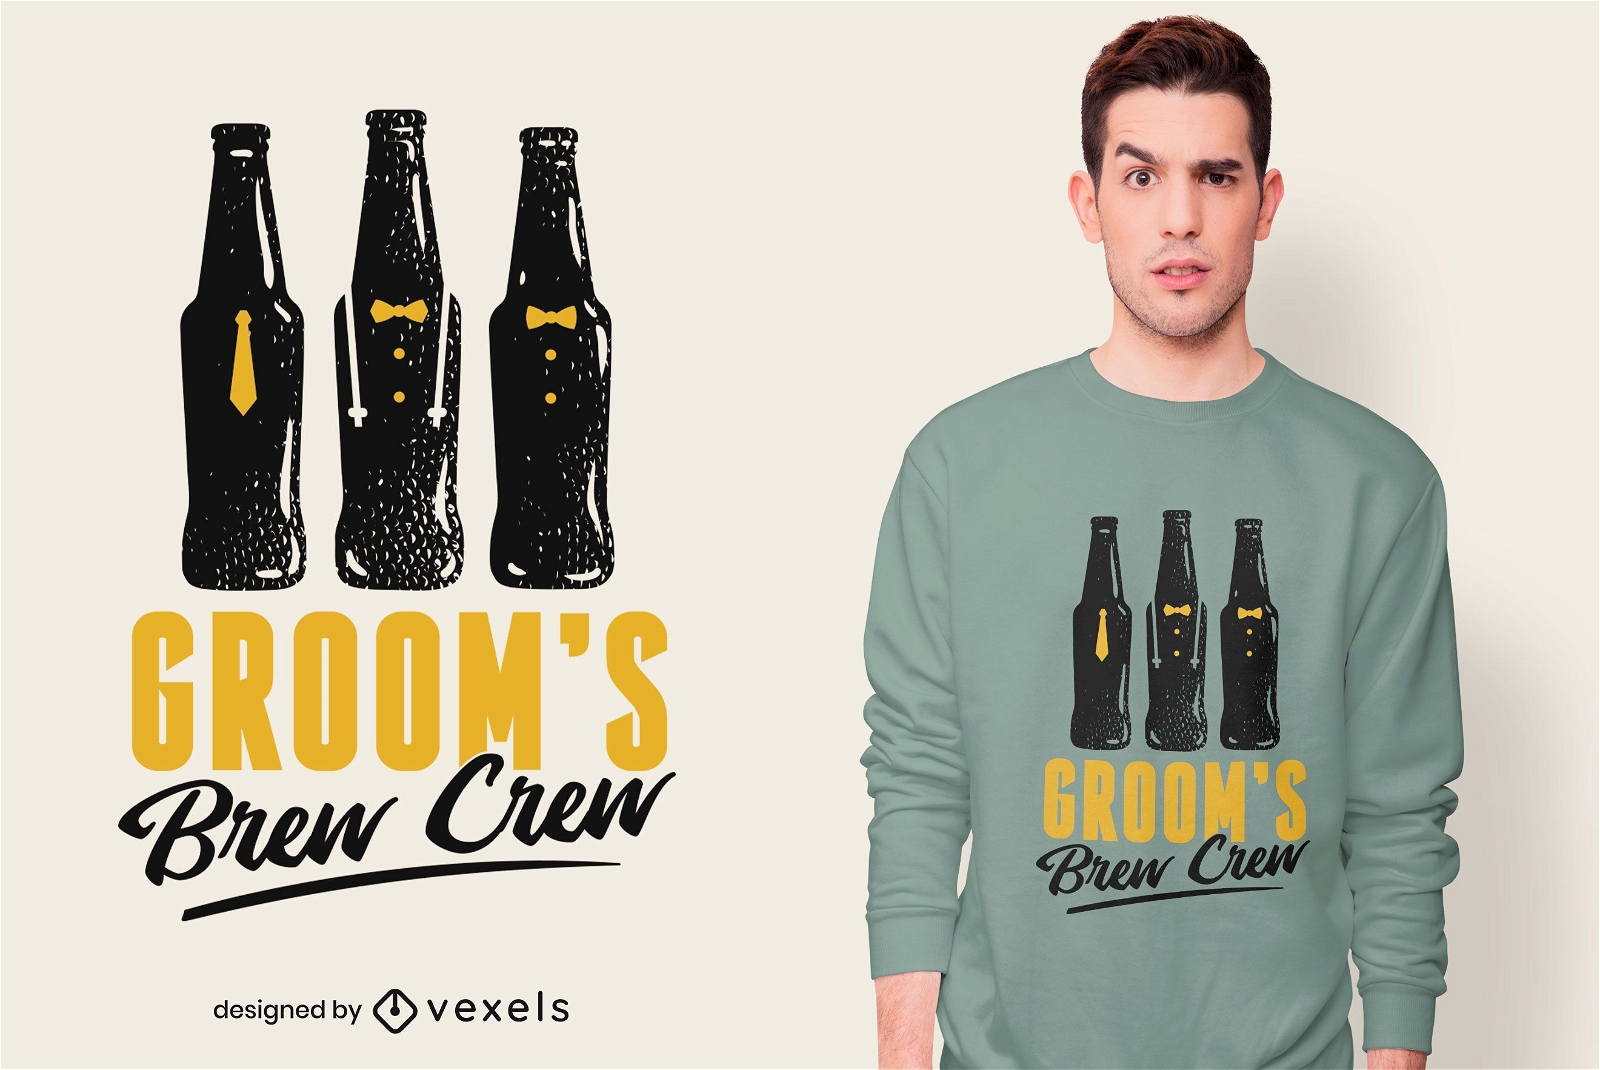 Groom's brew crew t-shirt design